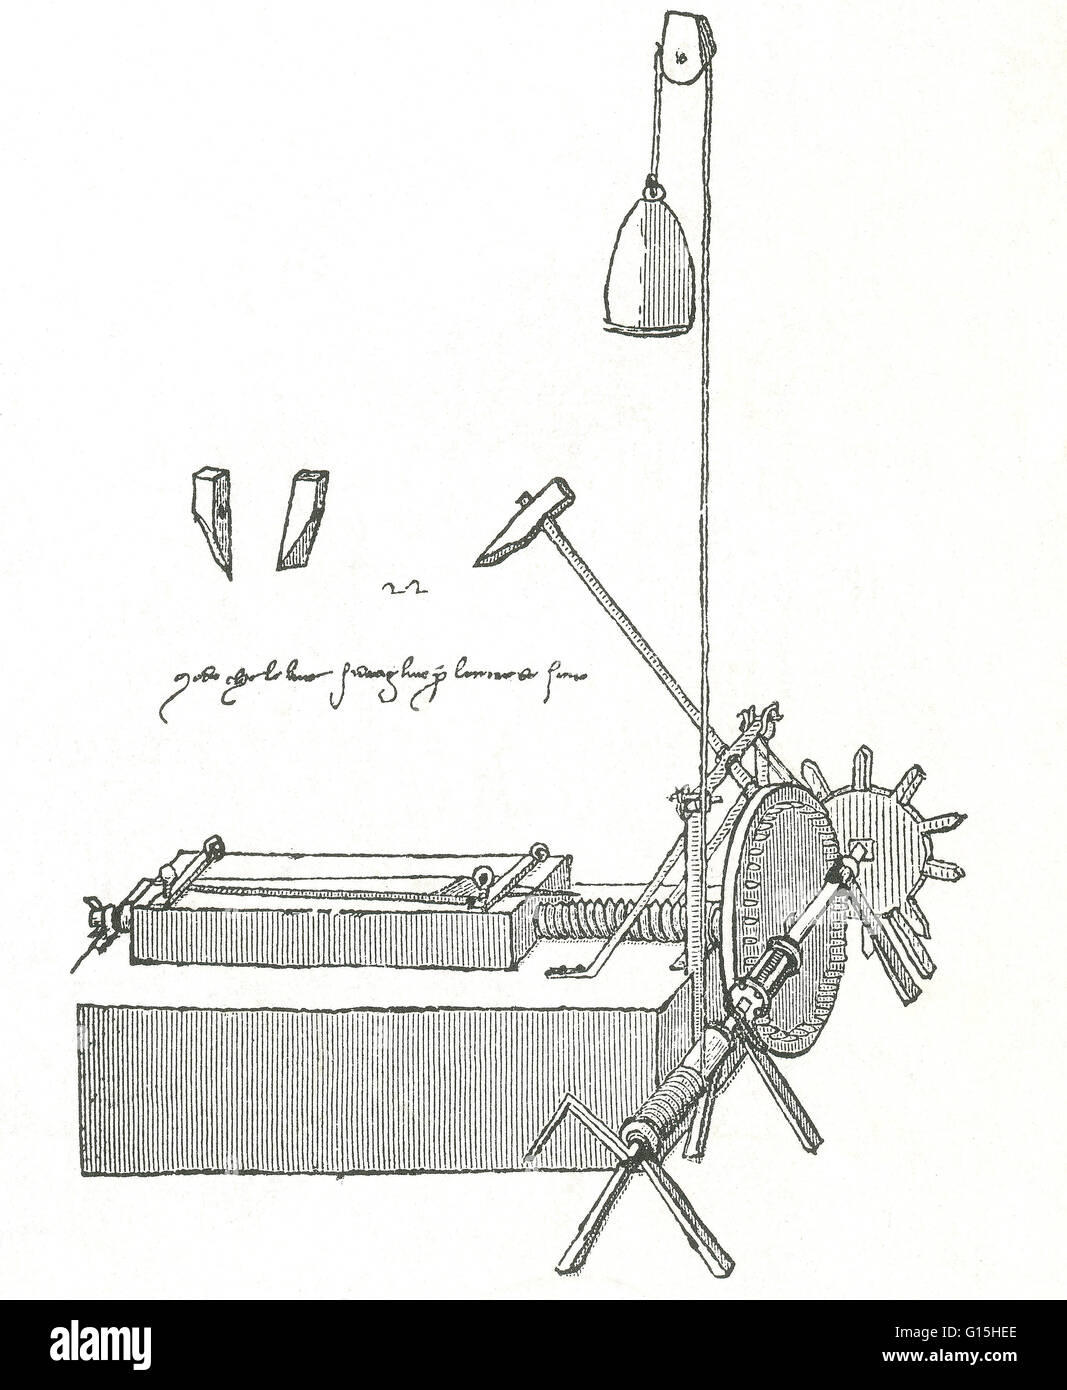 Illustration of a file cutting machine by Leonardo Da Vinci. Stock Photo